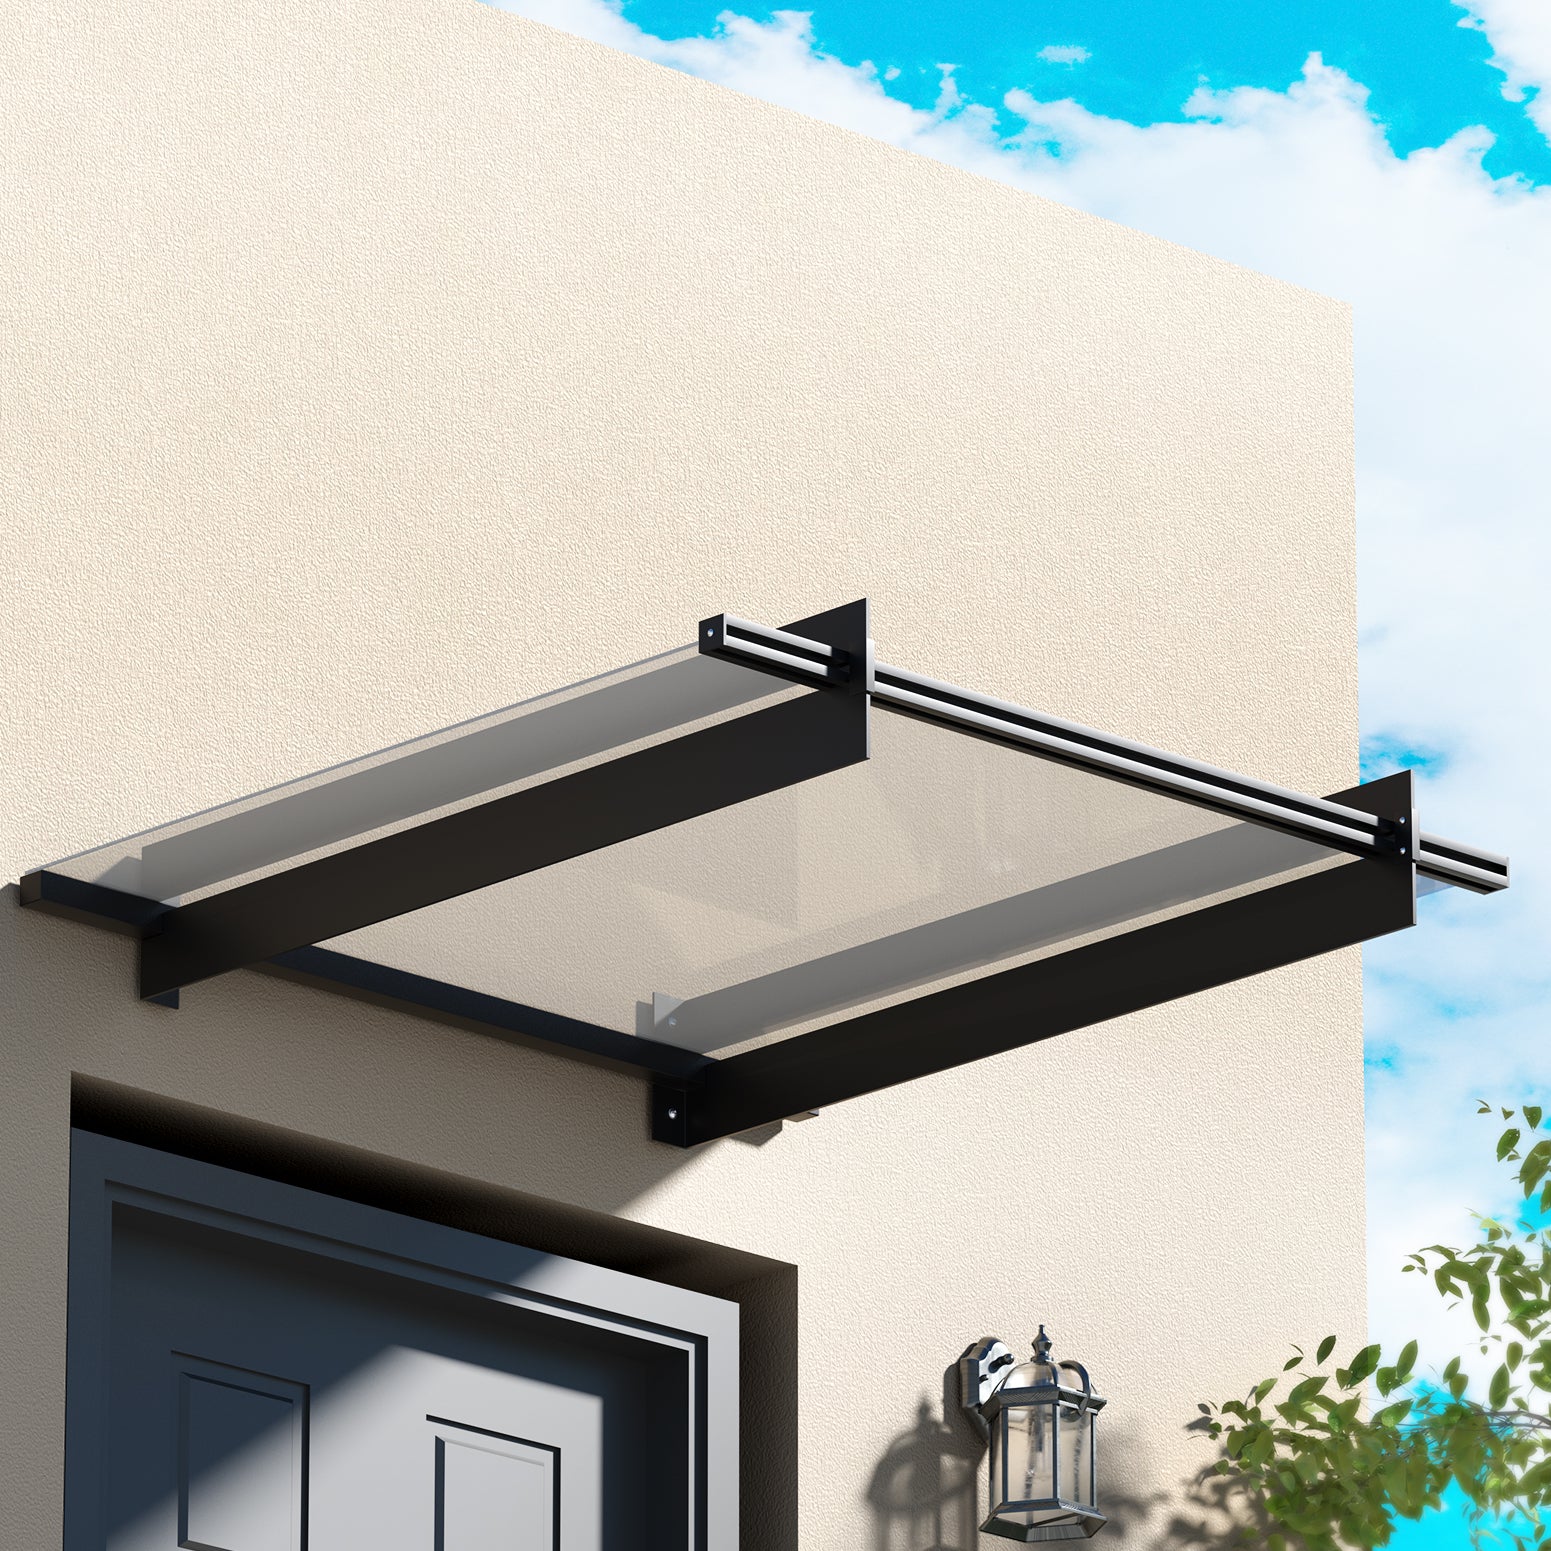 Instahut Window Door Awning Canopy 1mx1m Flat Transparent Sheet Metal Frame